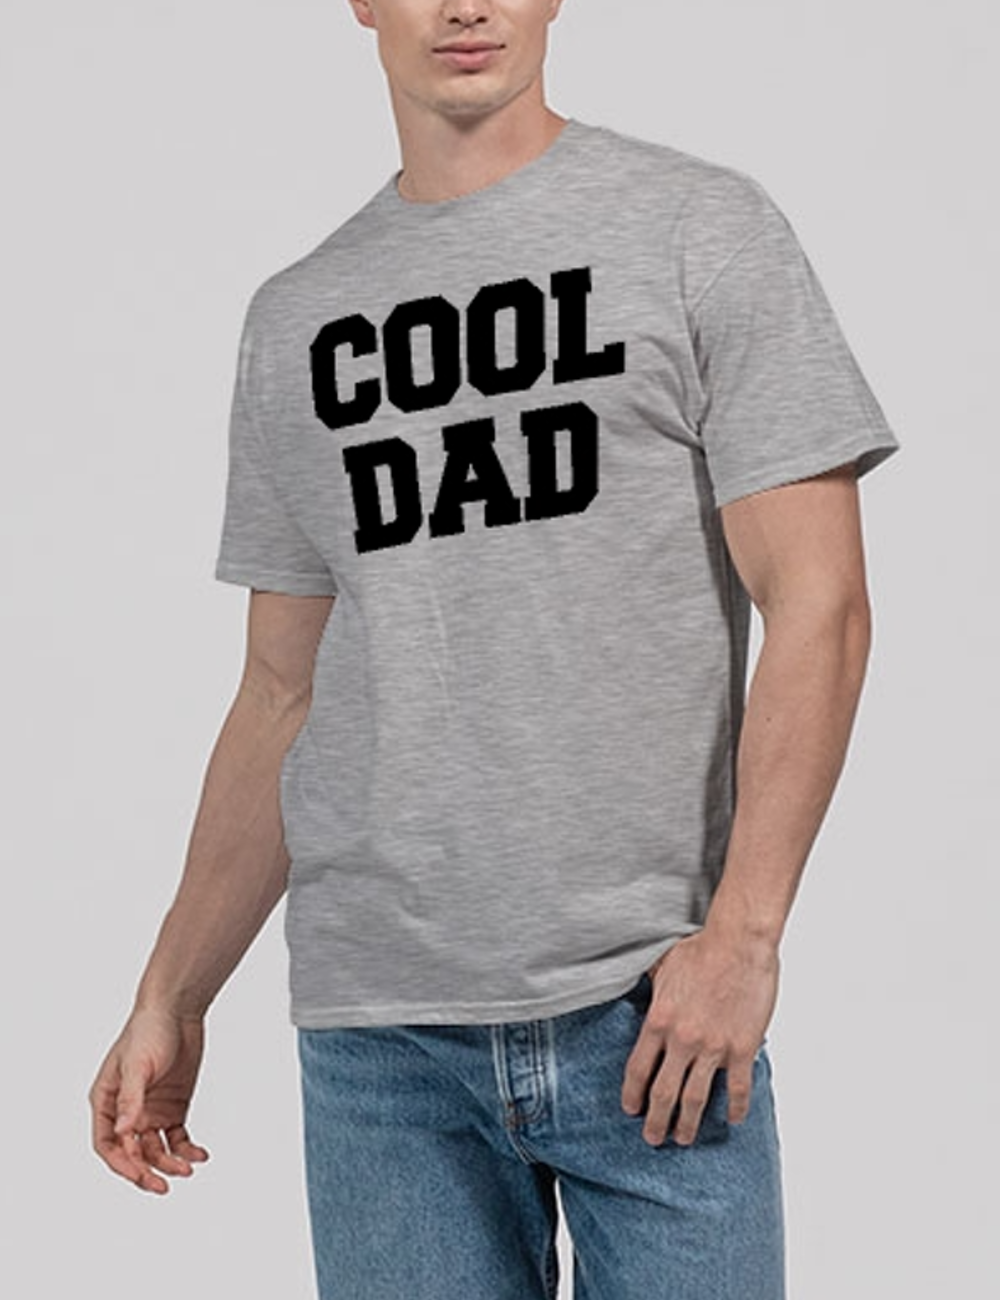 Cool Dad Men's Classic T-Shirt OniTakai